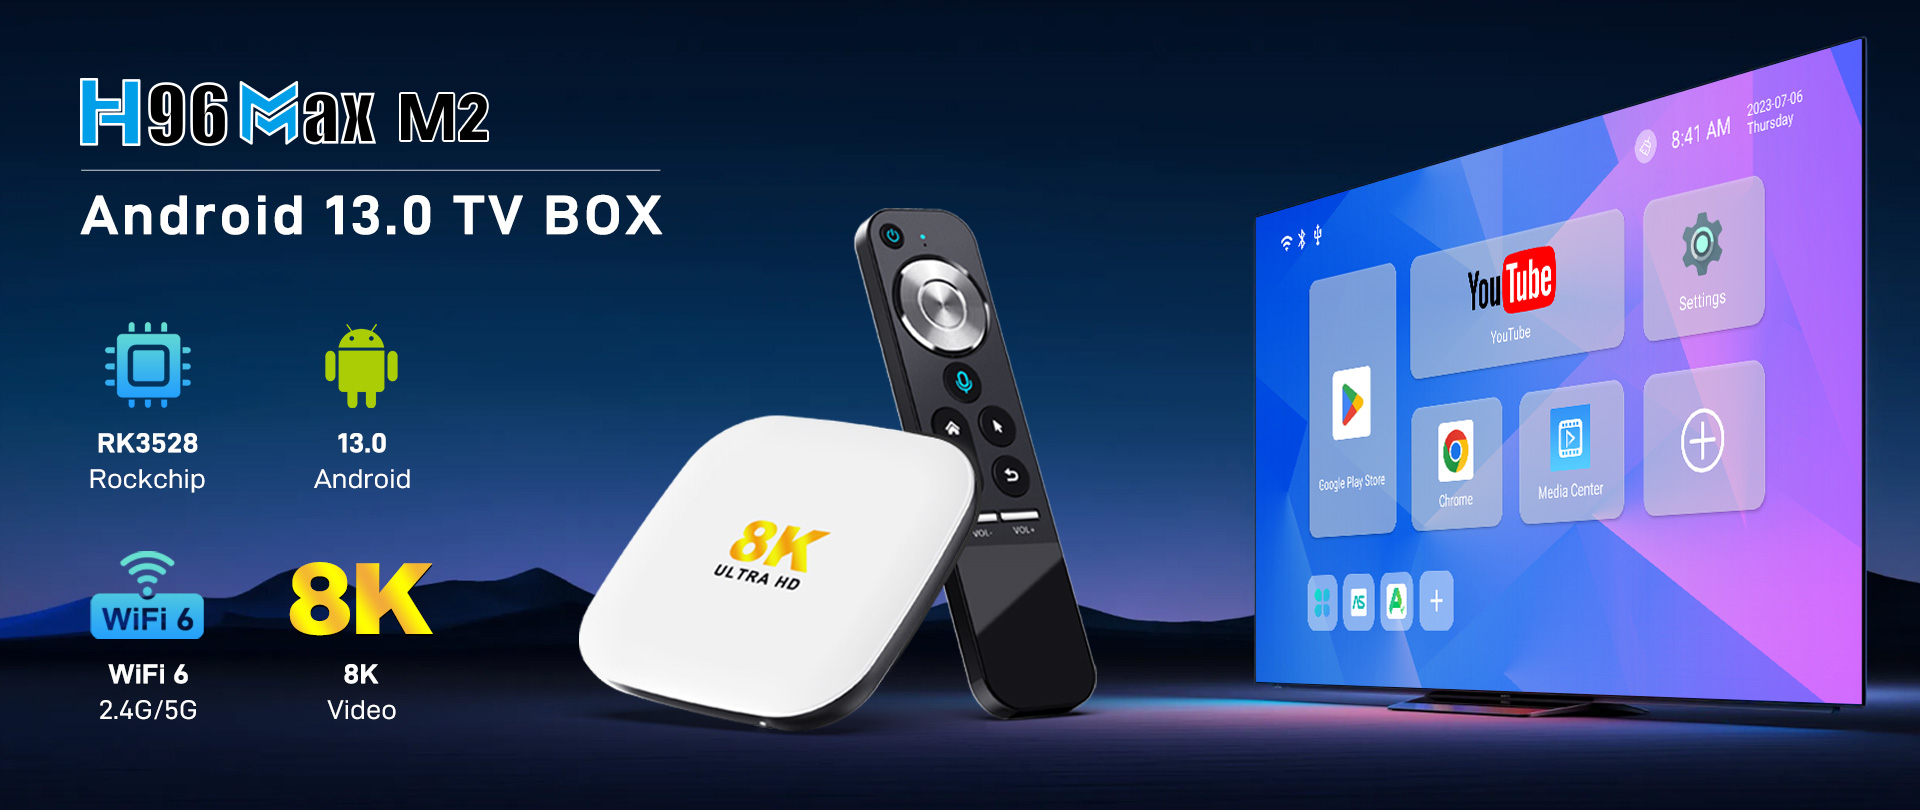 android tv box h96 max m2